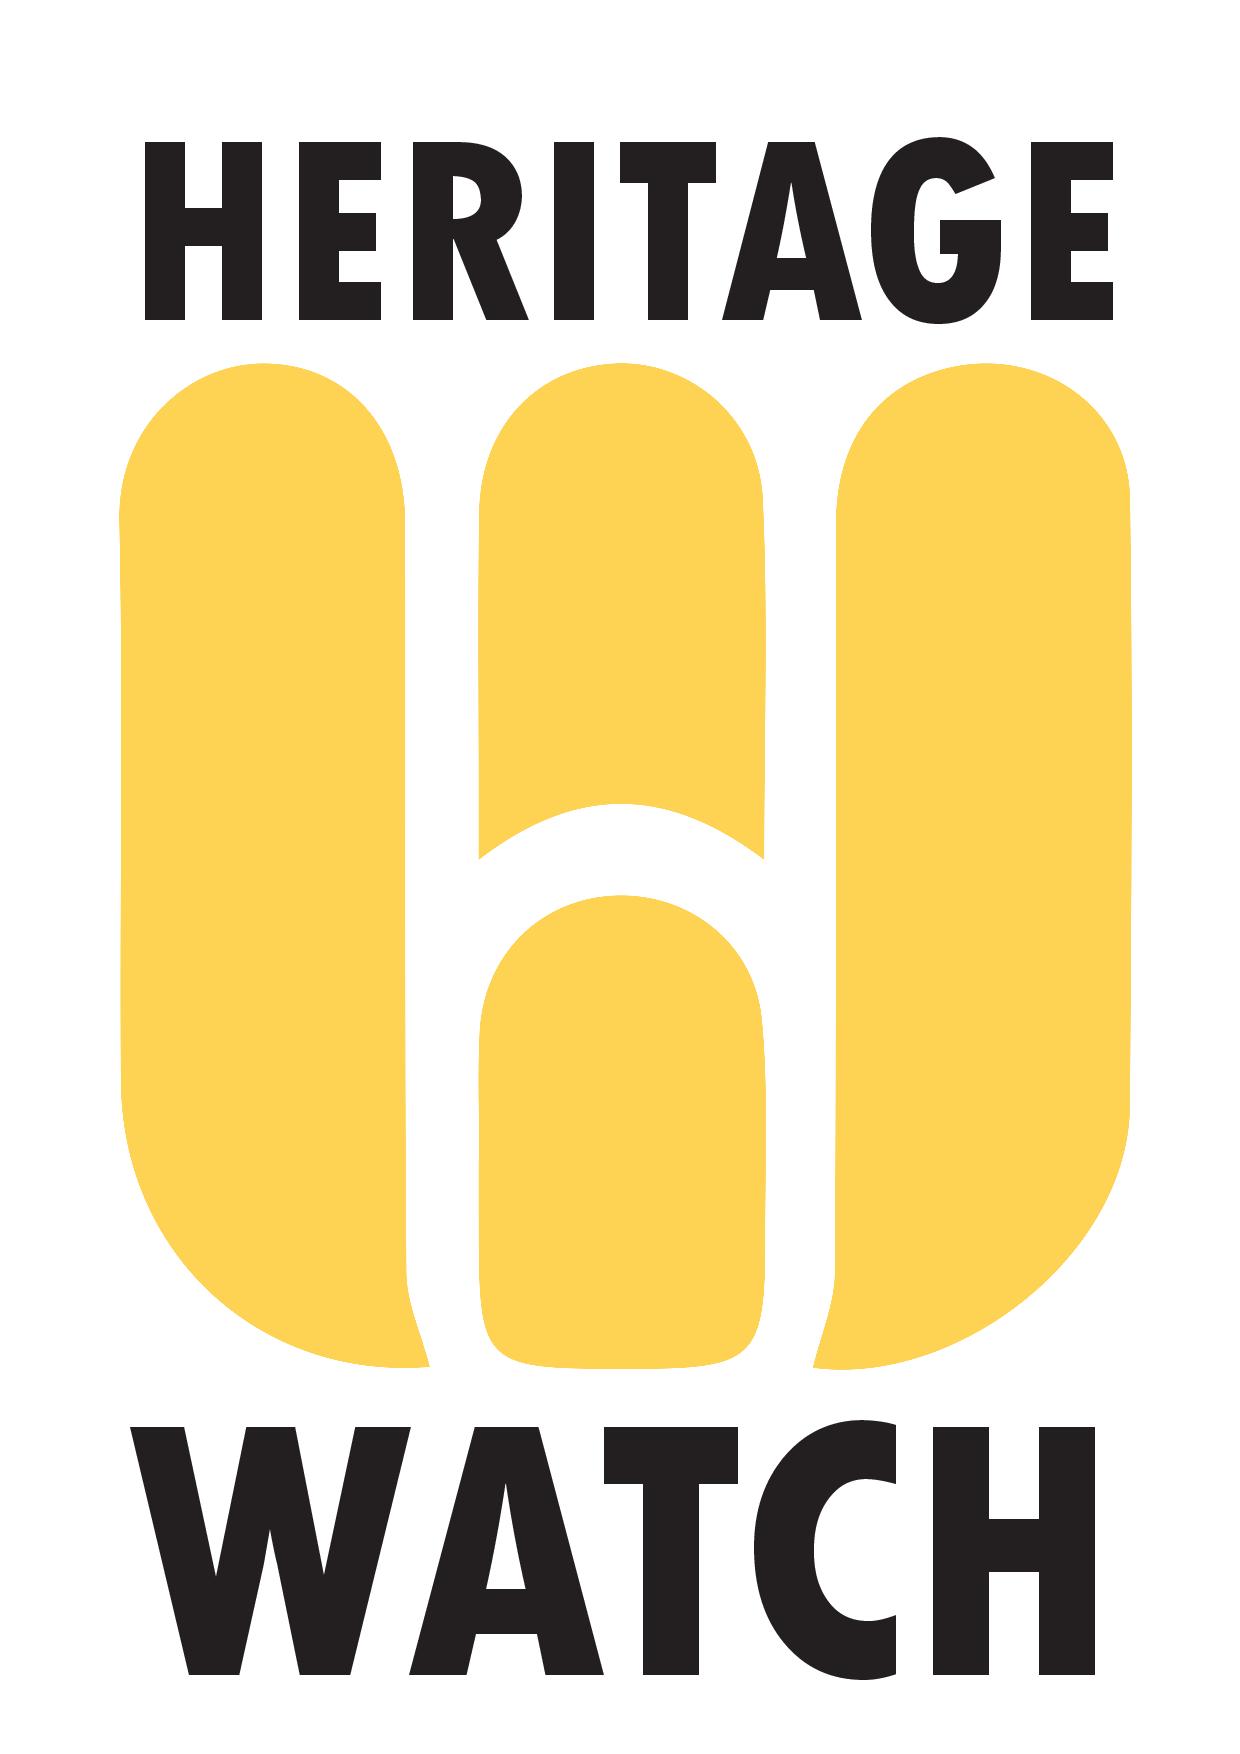 Heritage Watch Ethiopia logo